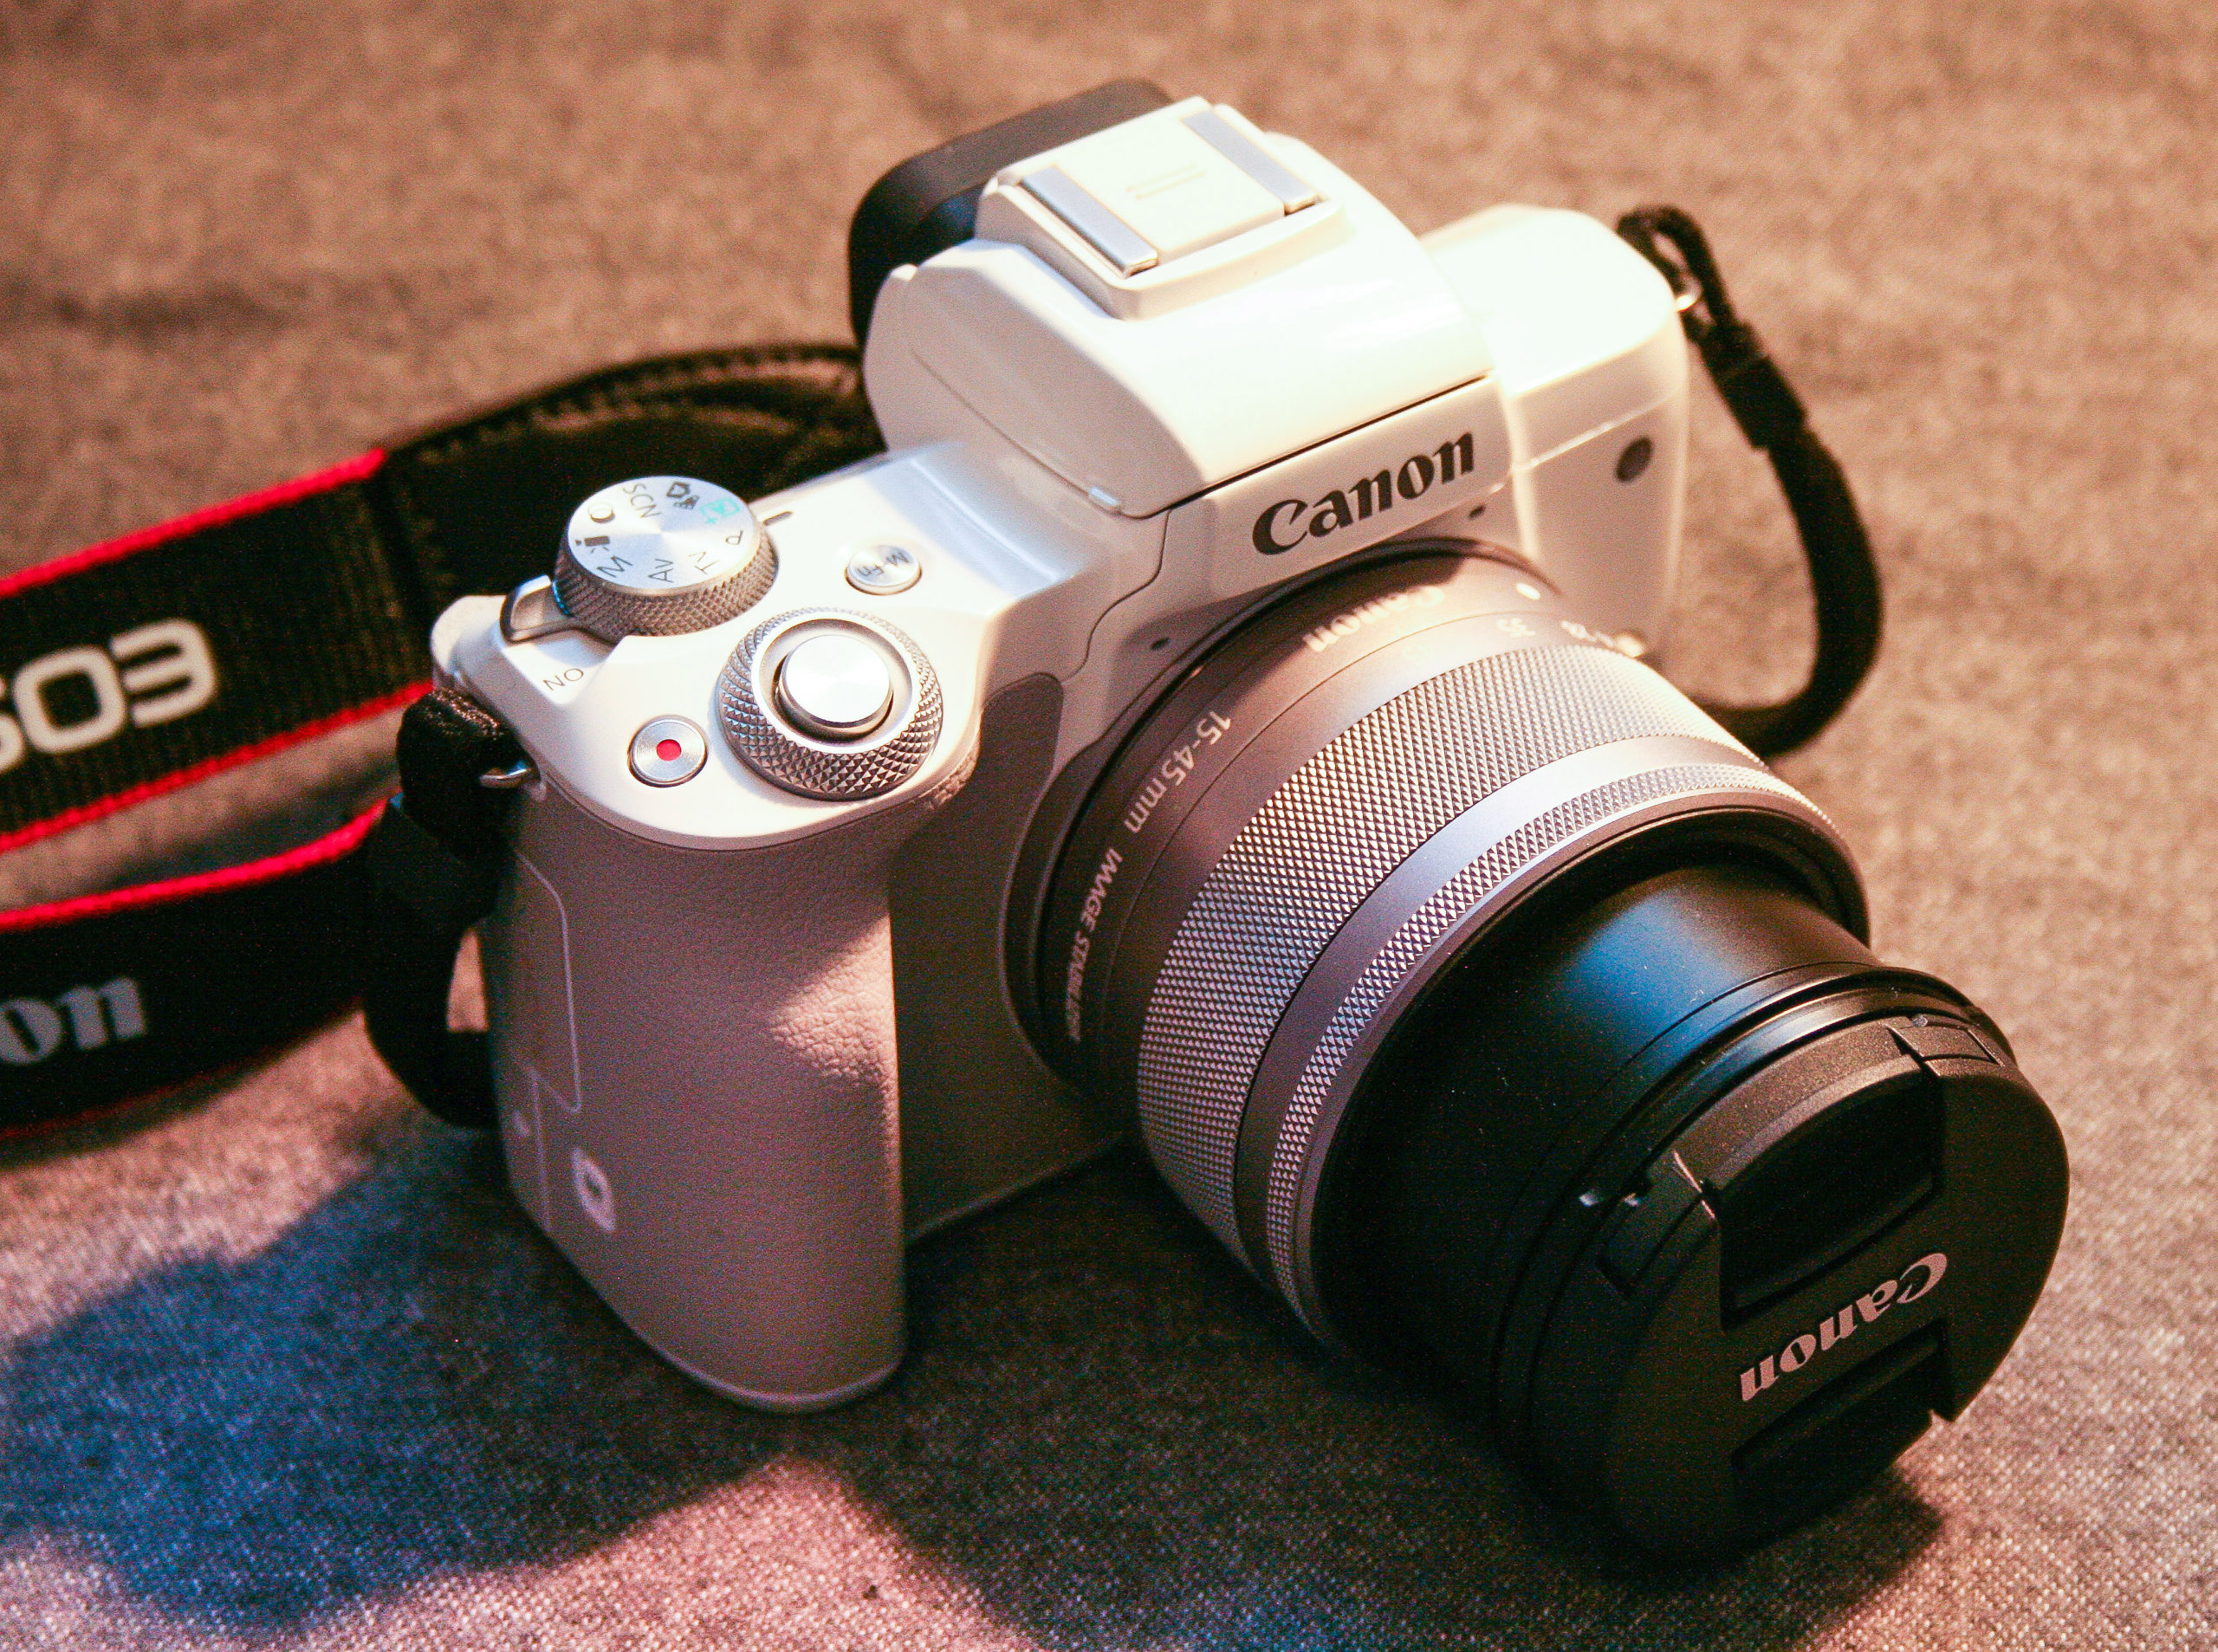 The new Canon EOS M50 Mark II. Image credit: Wikipedia